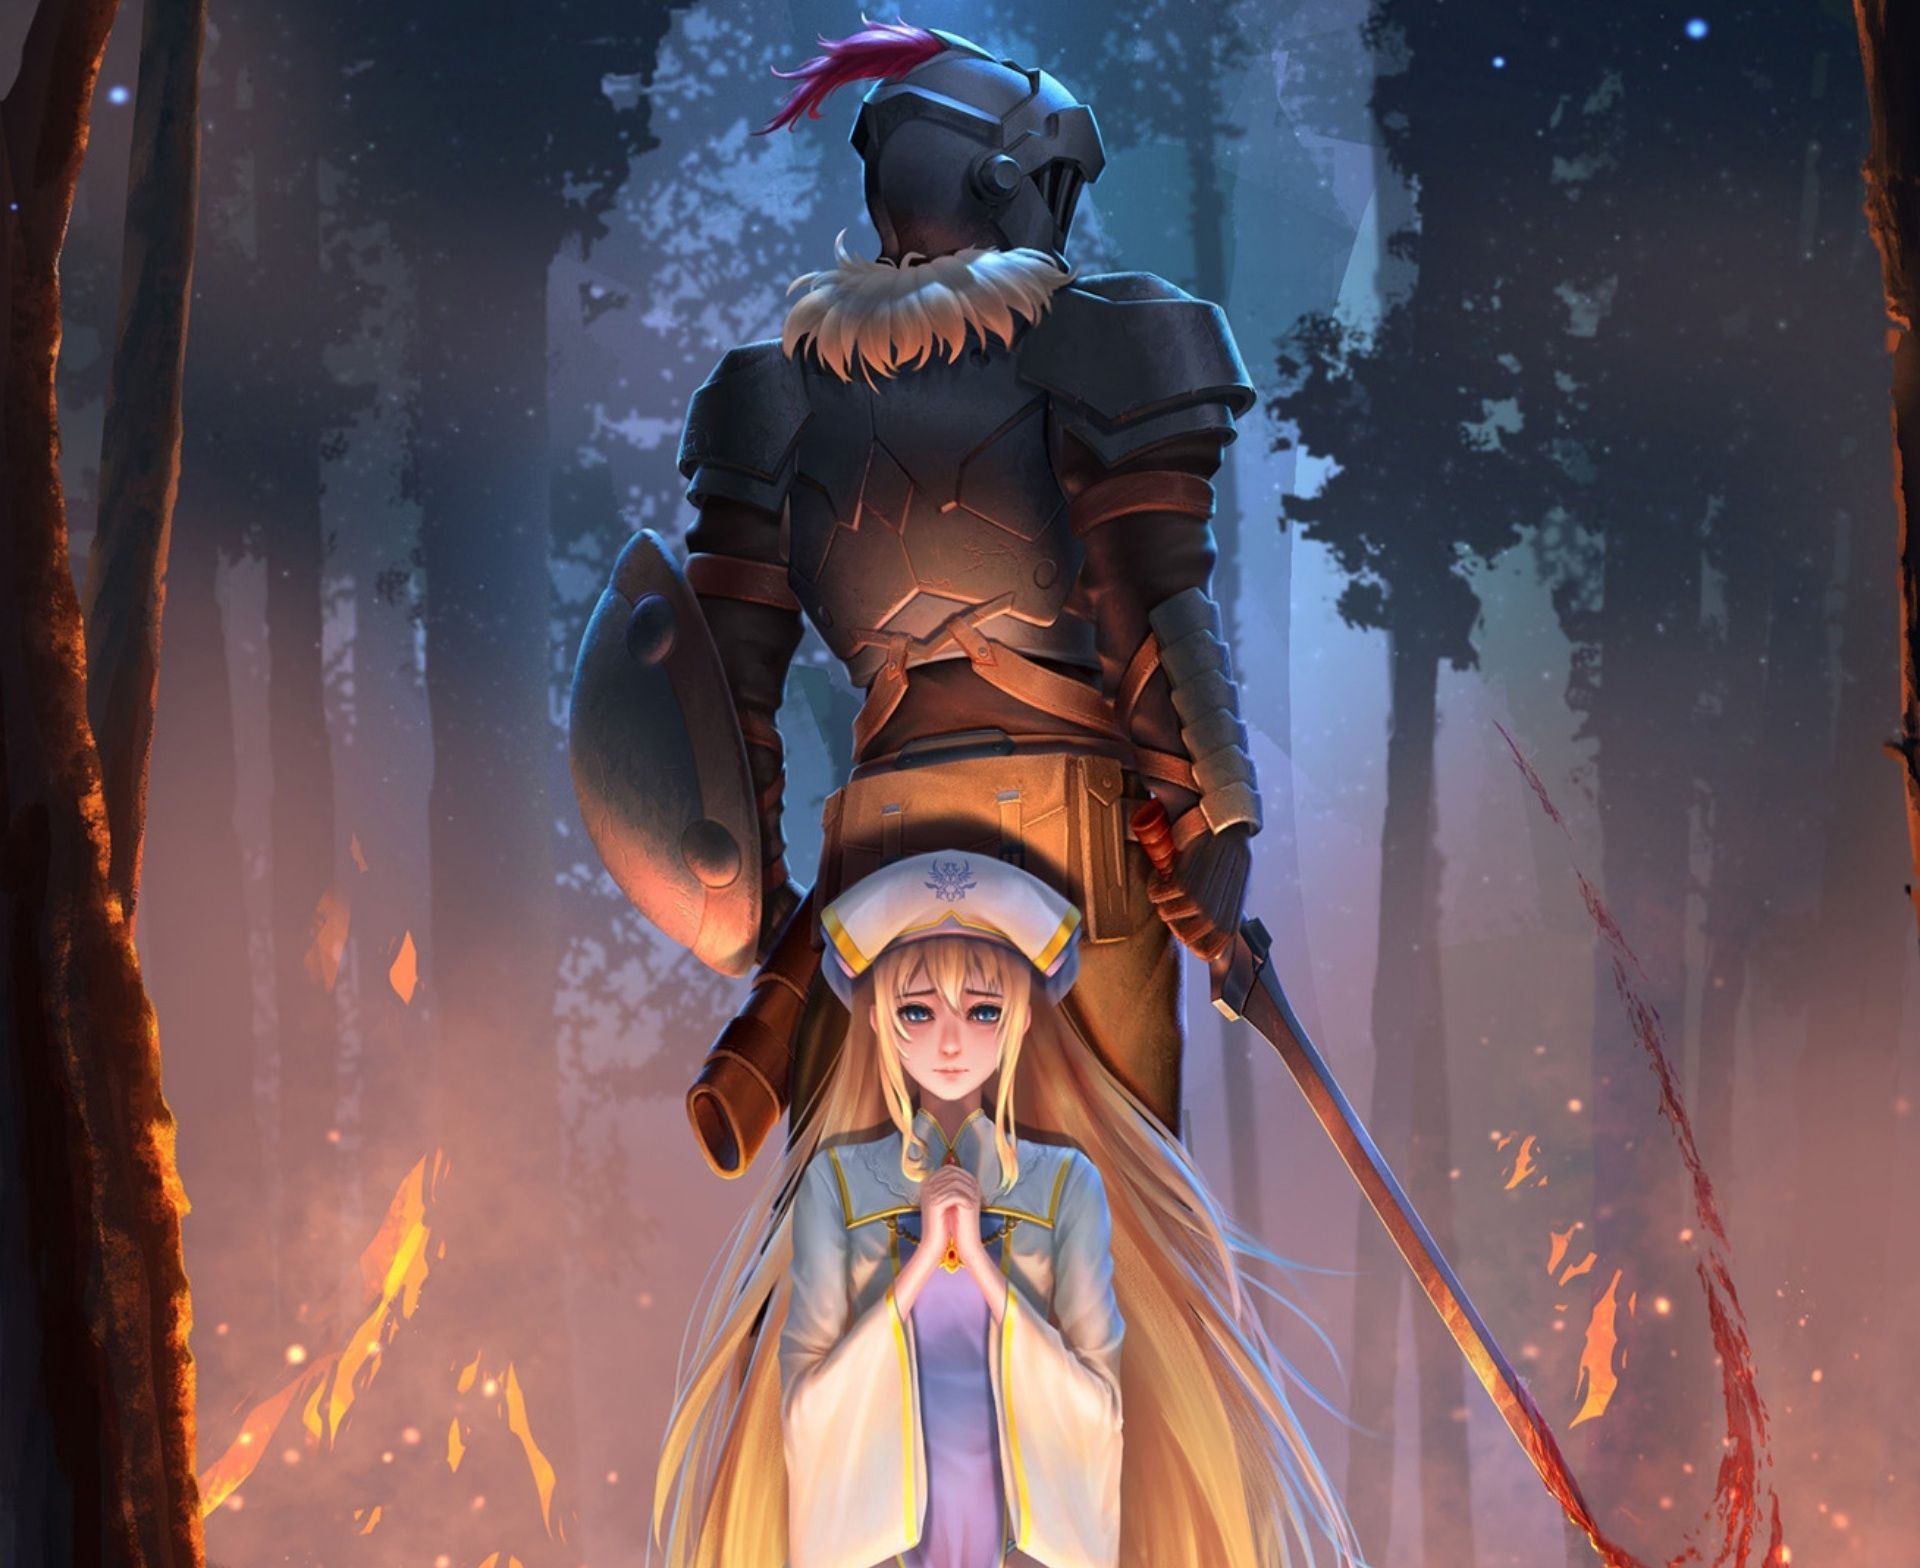 Goblin Slayer Priestess Wallpaper, HD Anime 4K Wallpaper, Image, Photo and Background